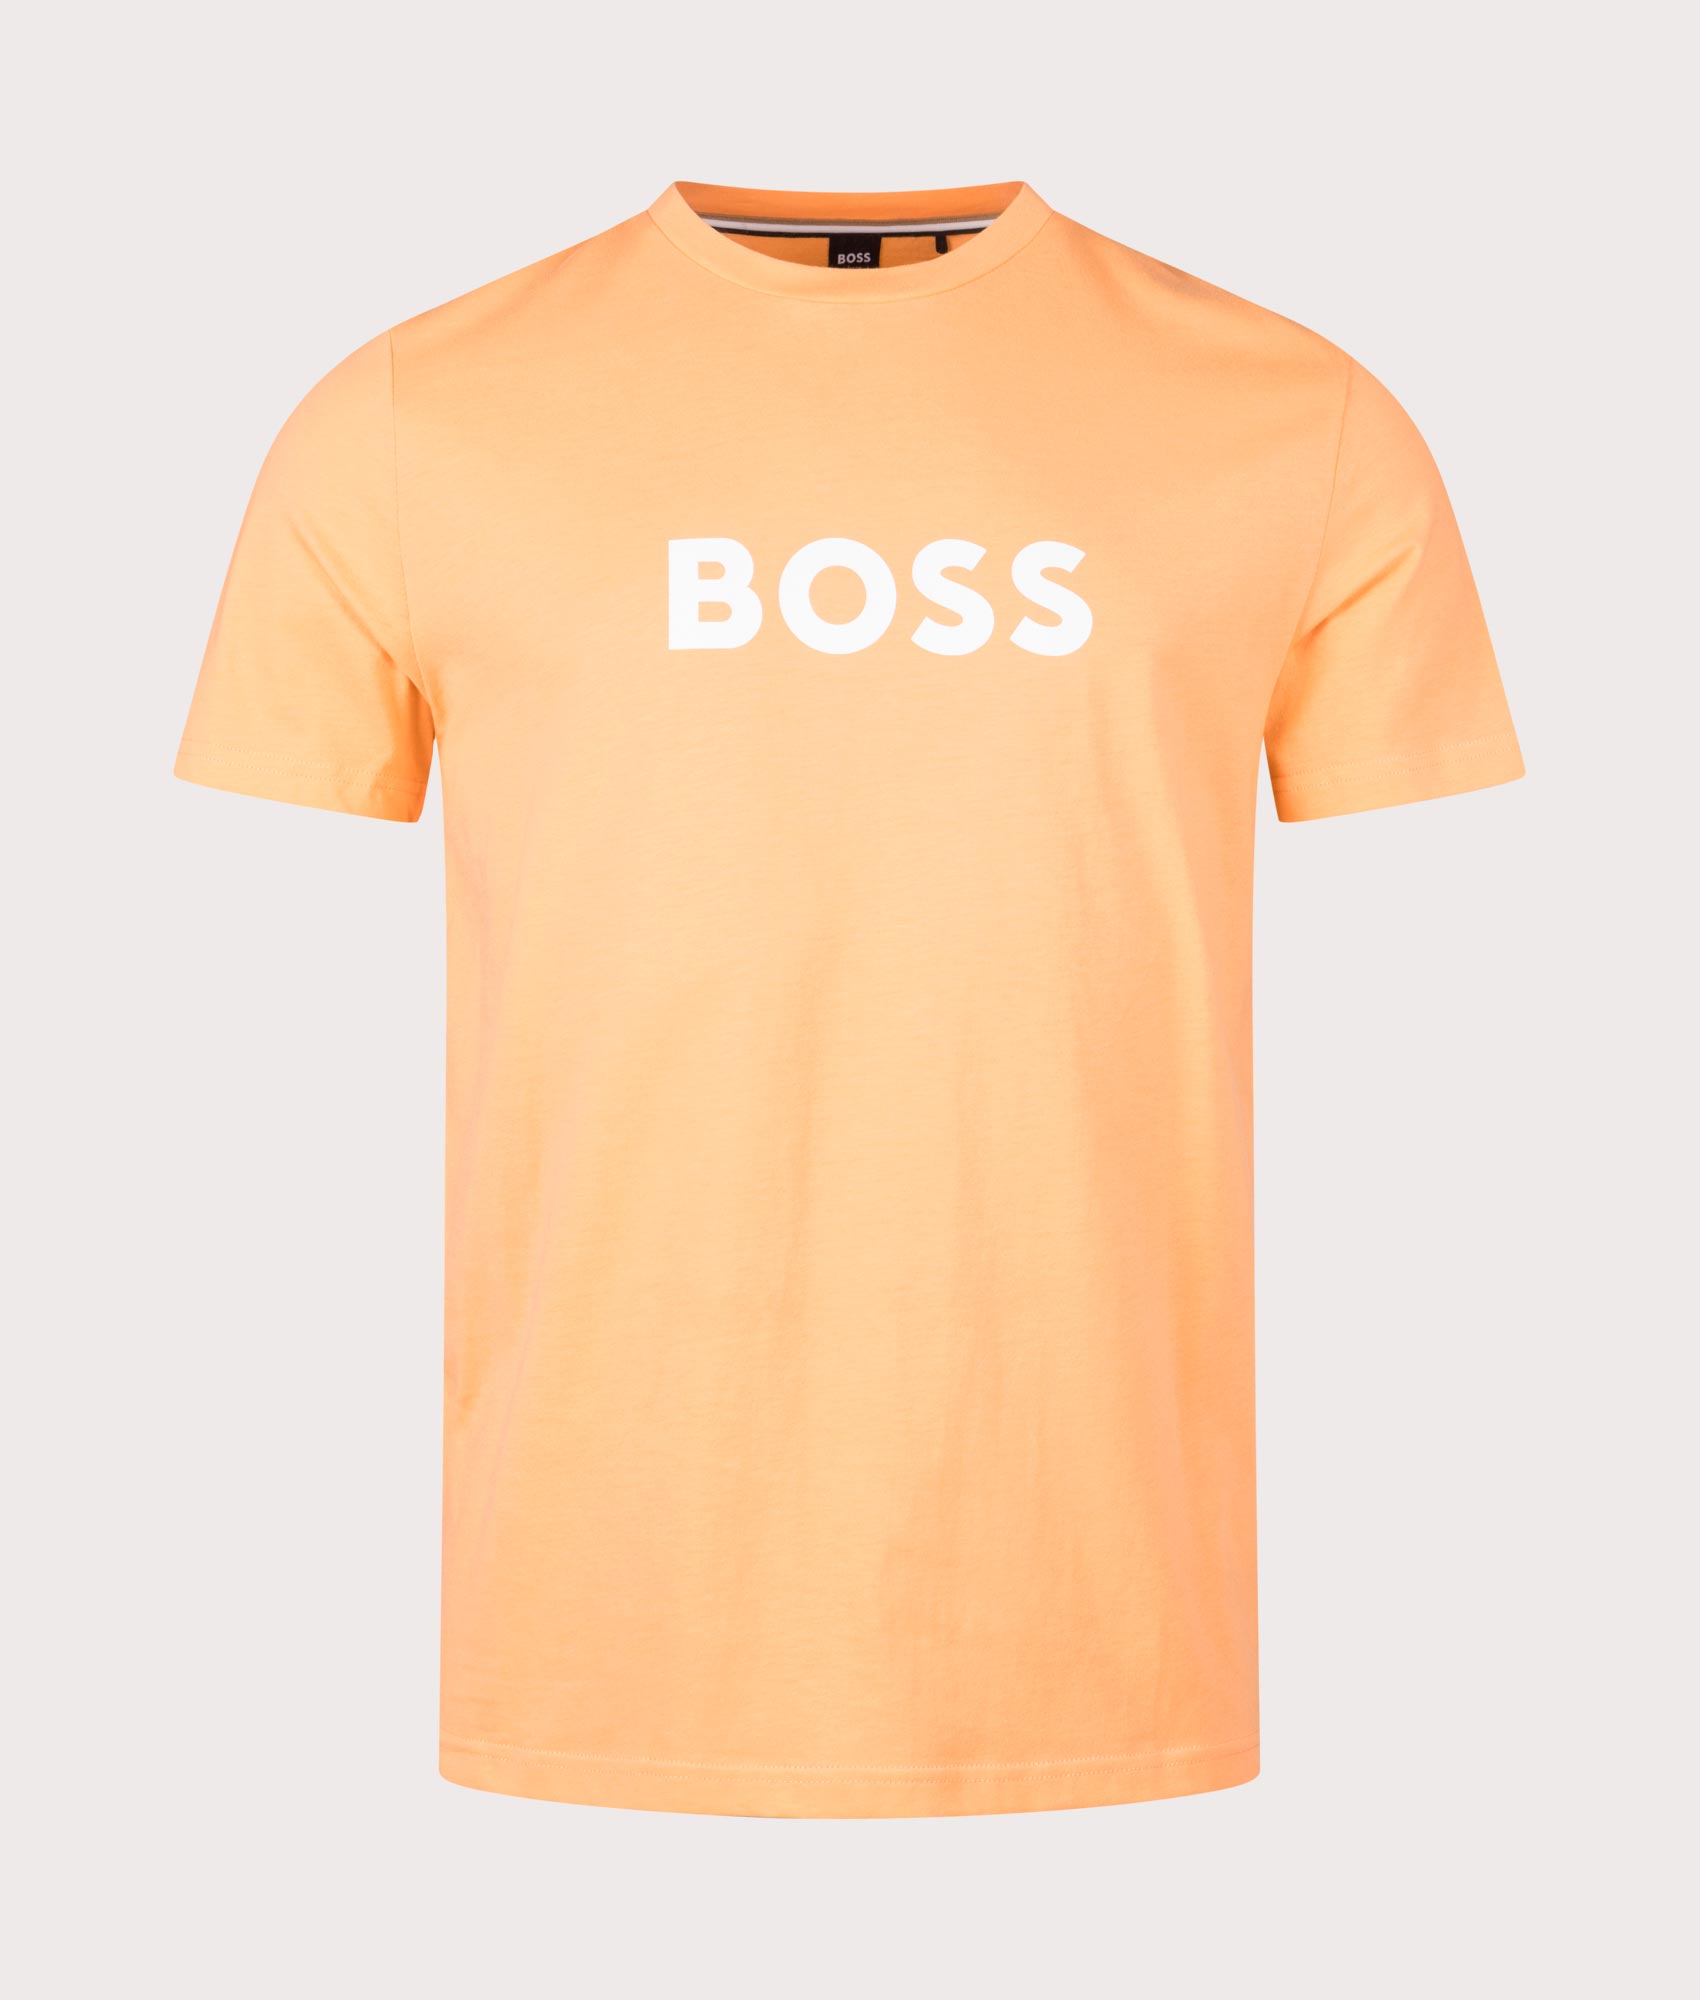 BOSS Mens Round Neck T-Shirt - Colour: 813 Medium Orange - Size: XXL